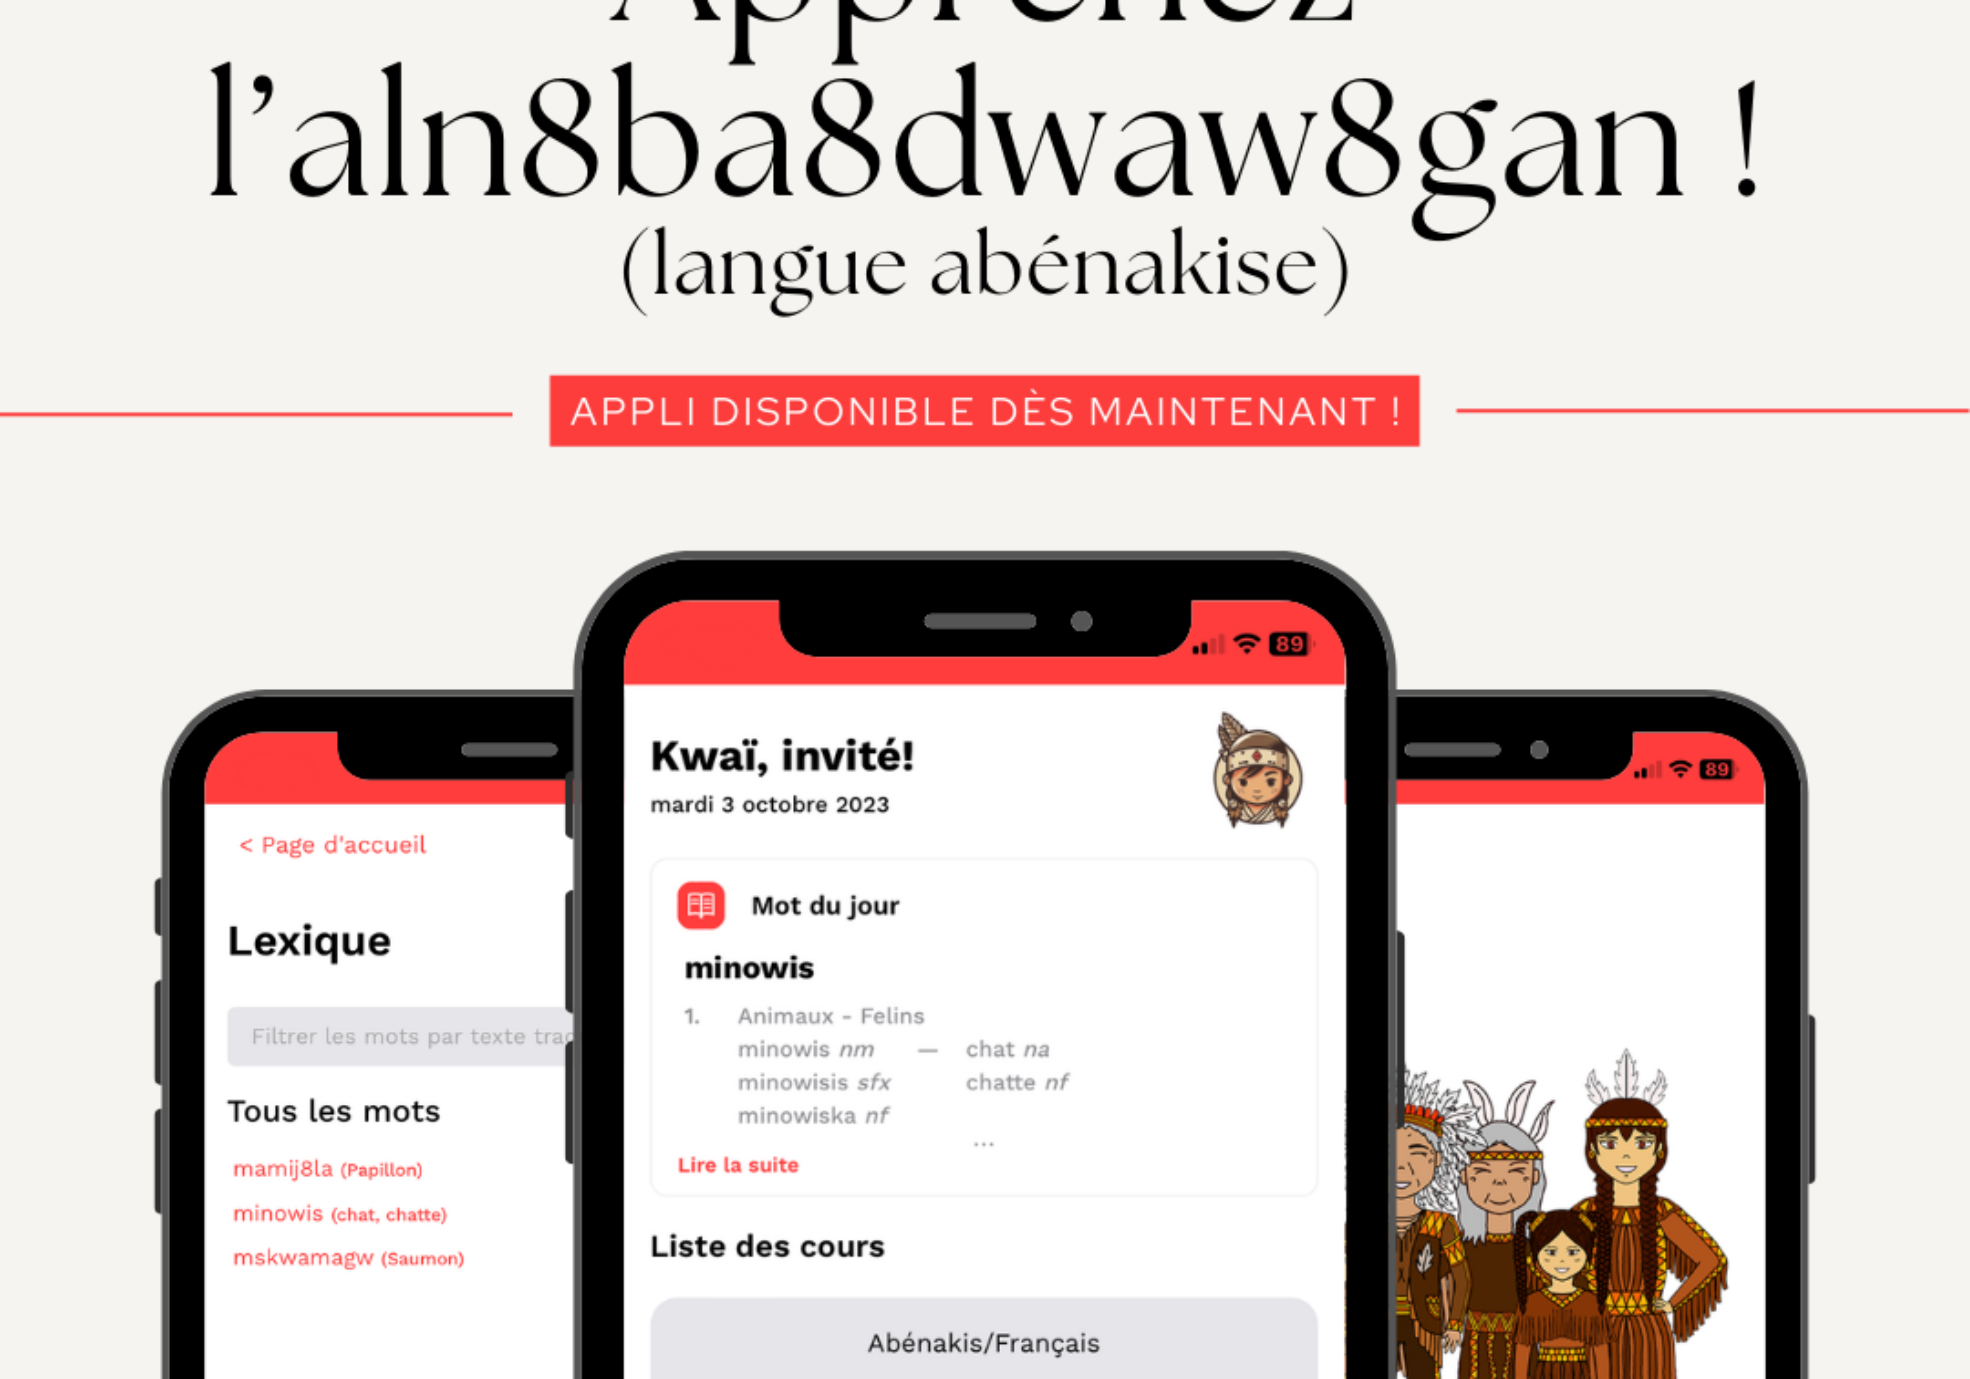 CAO_Lancement-appli-langue-abenakise